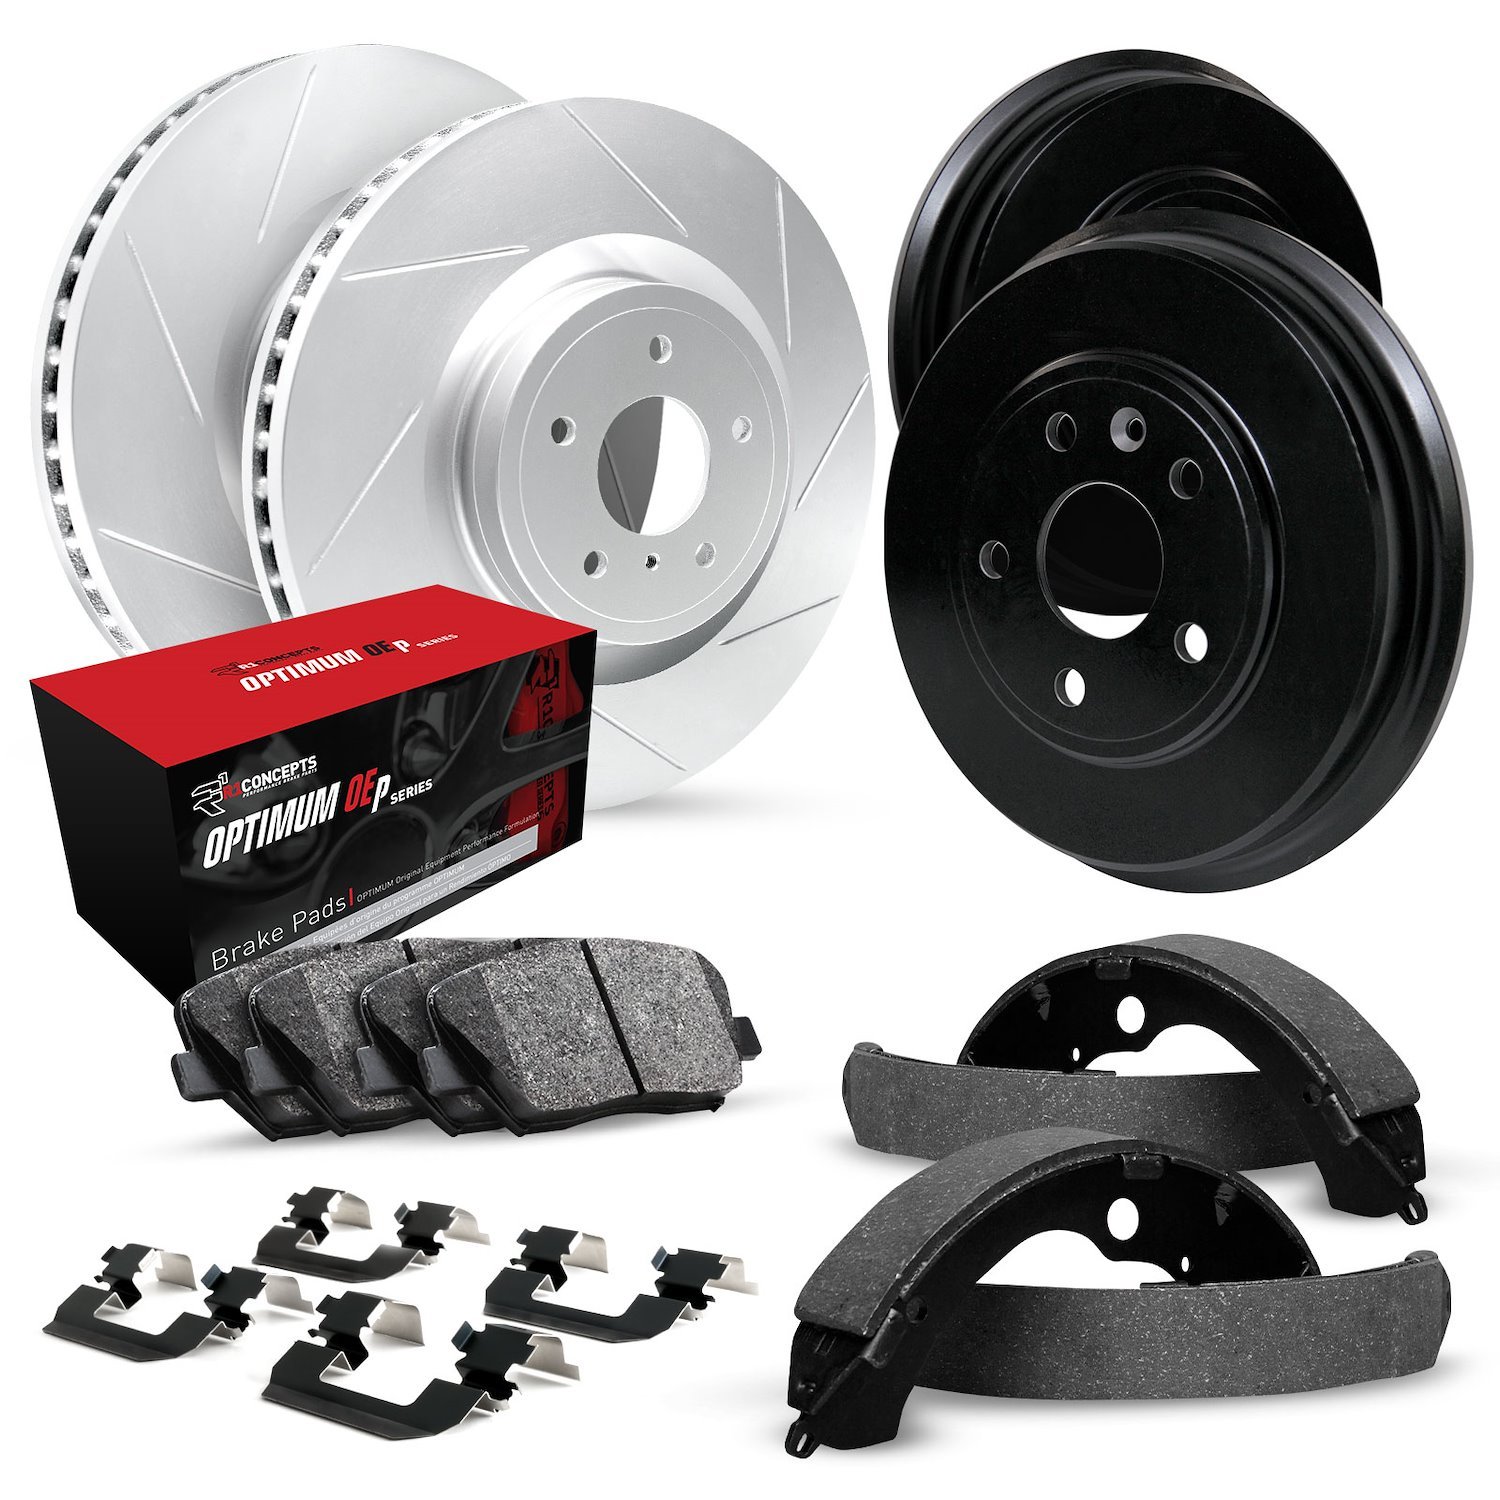 GEO-Carbon Slotted Brake Rotor & Drum Set w/Optimum OE Pads, Shoes, & Hardware, 2013-2019 Infiniti/Nissan